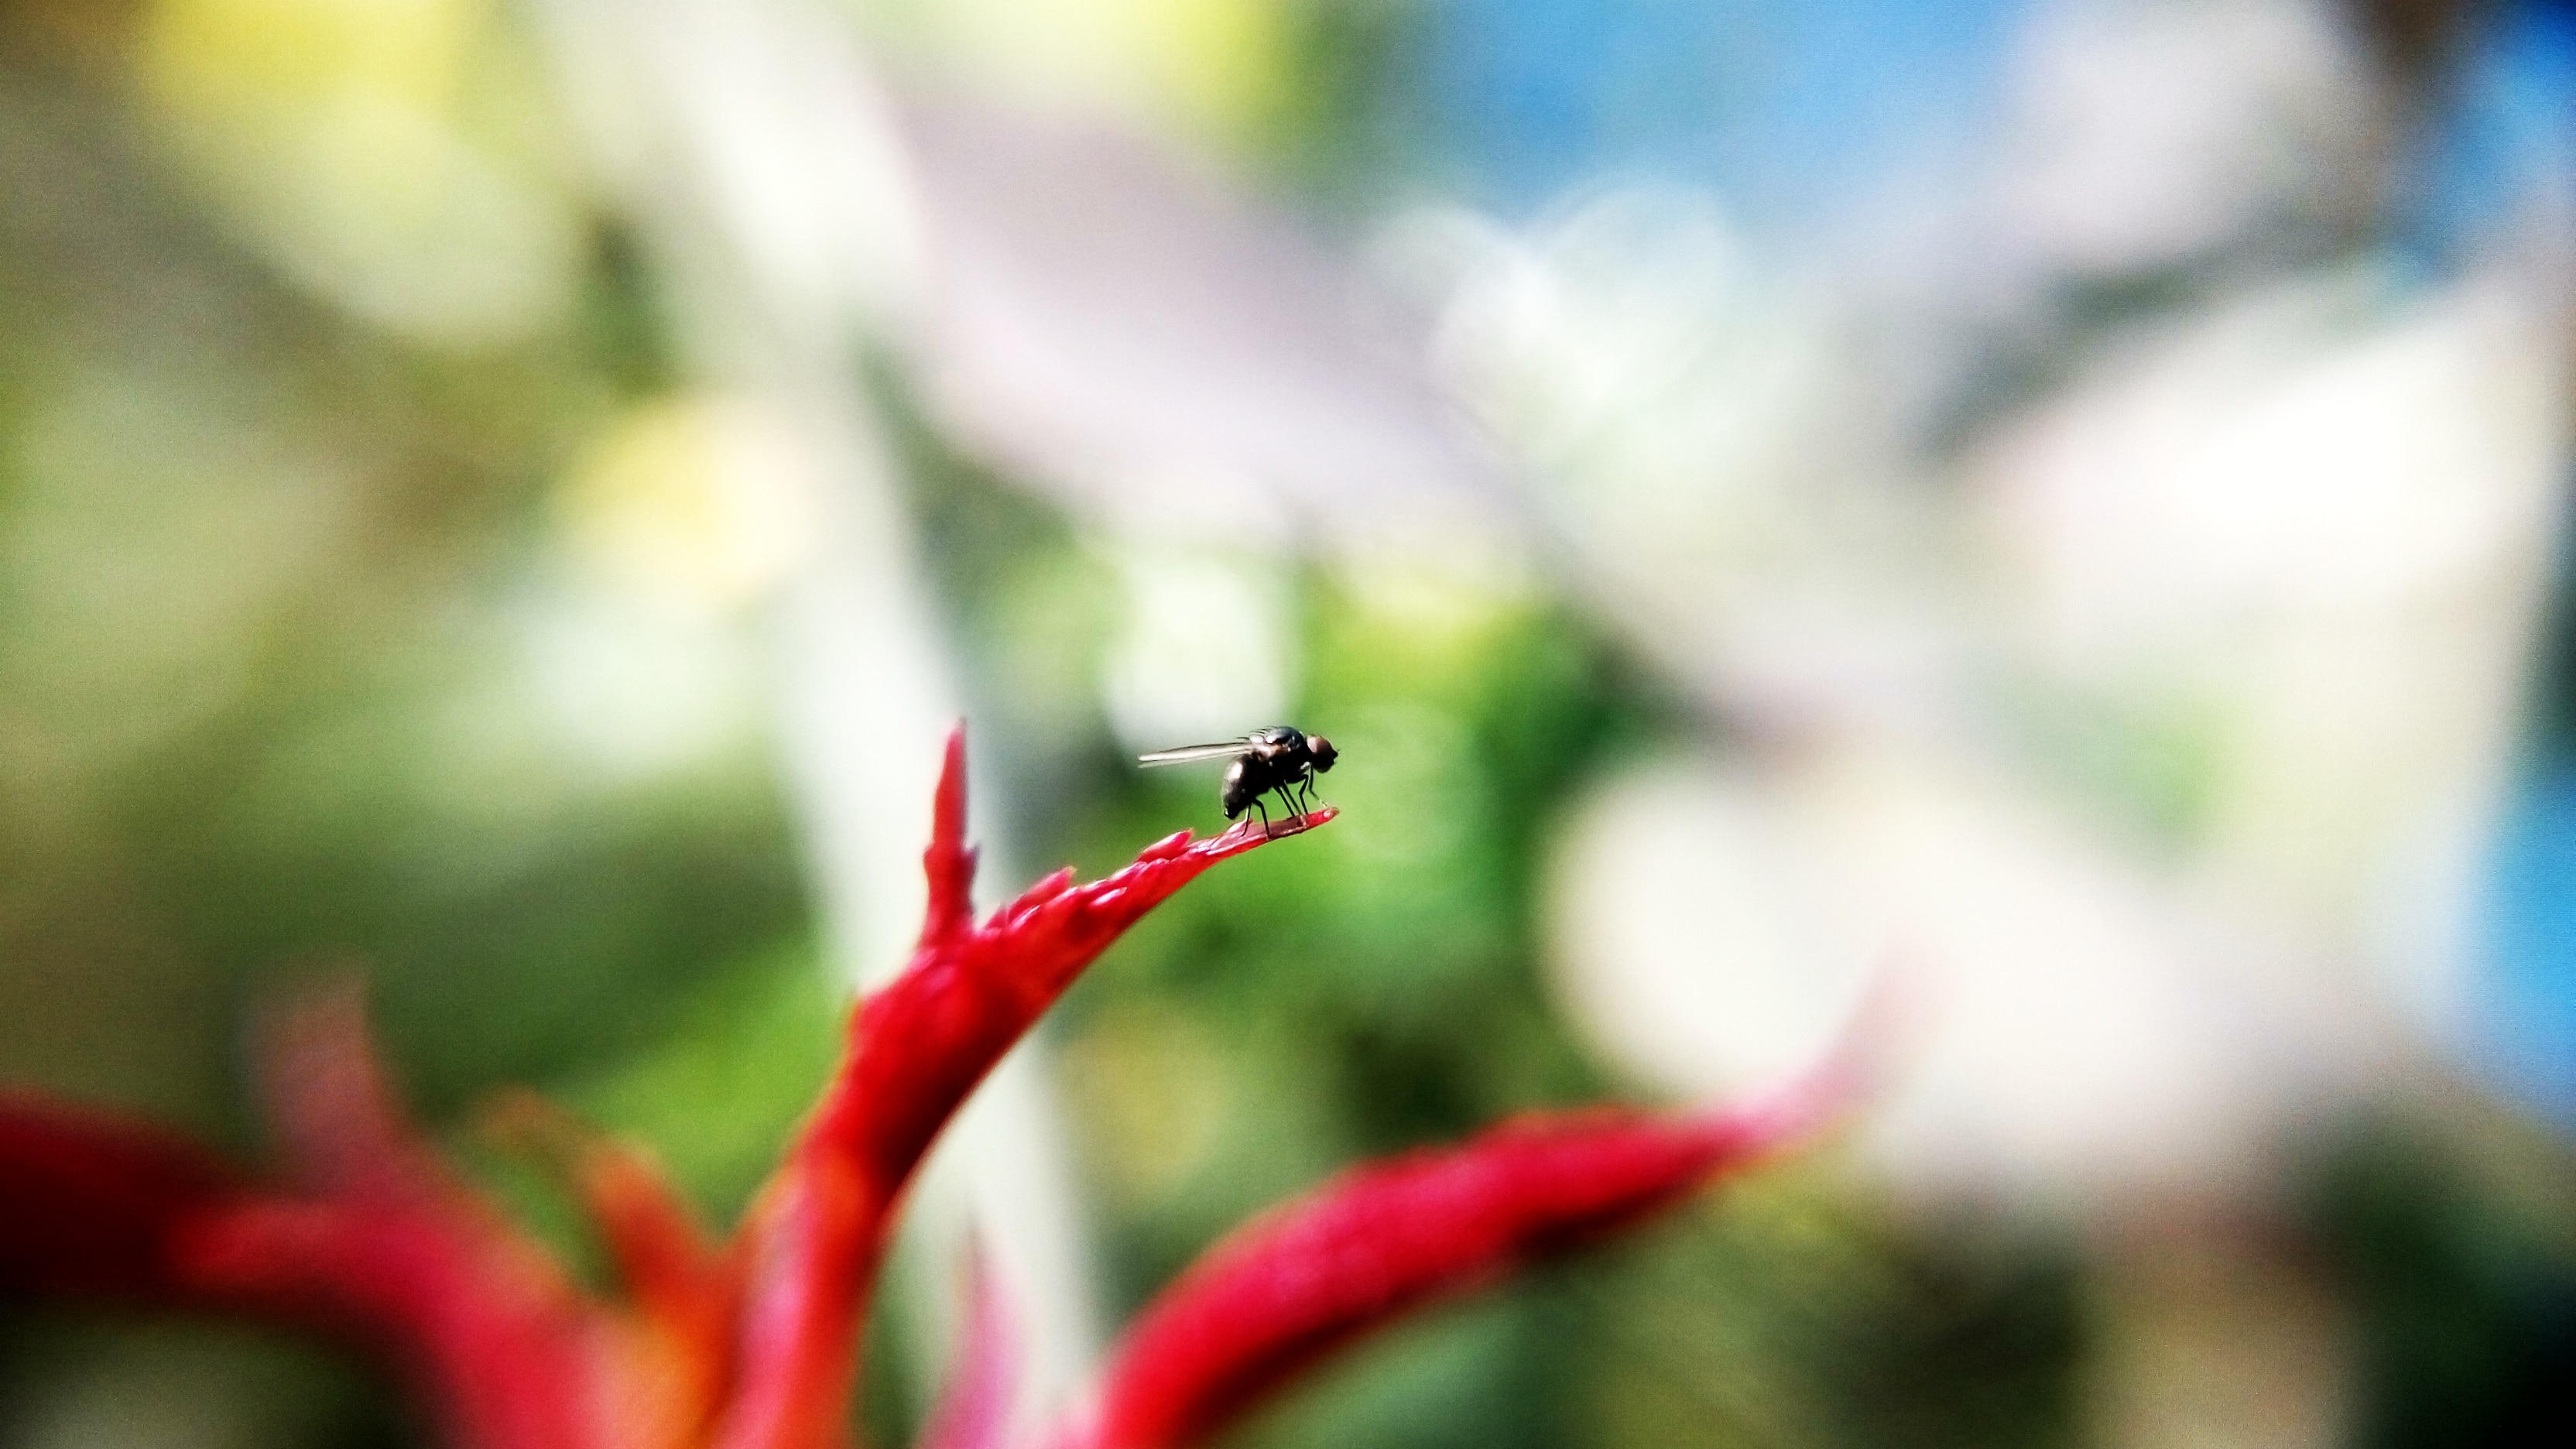 common housefly on red petaled flower